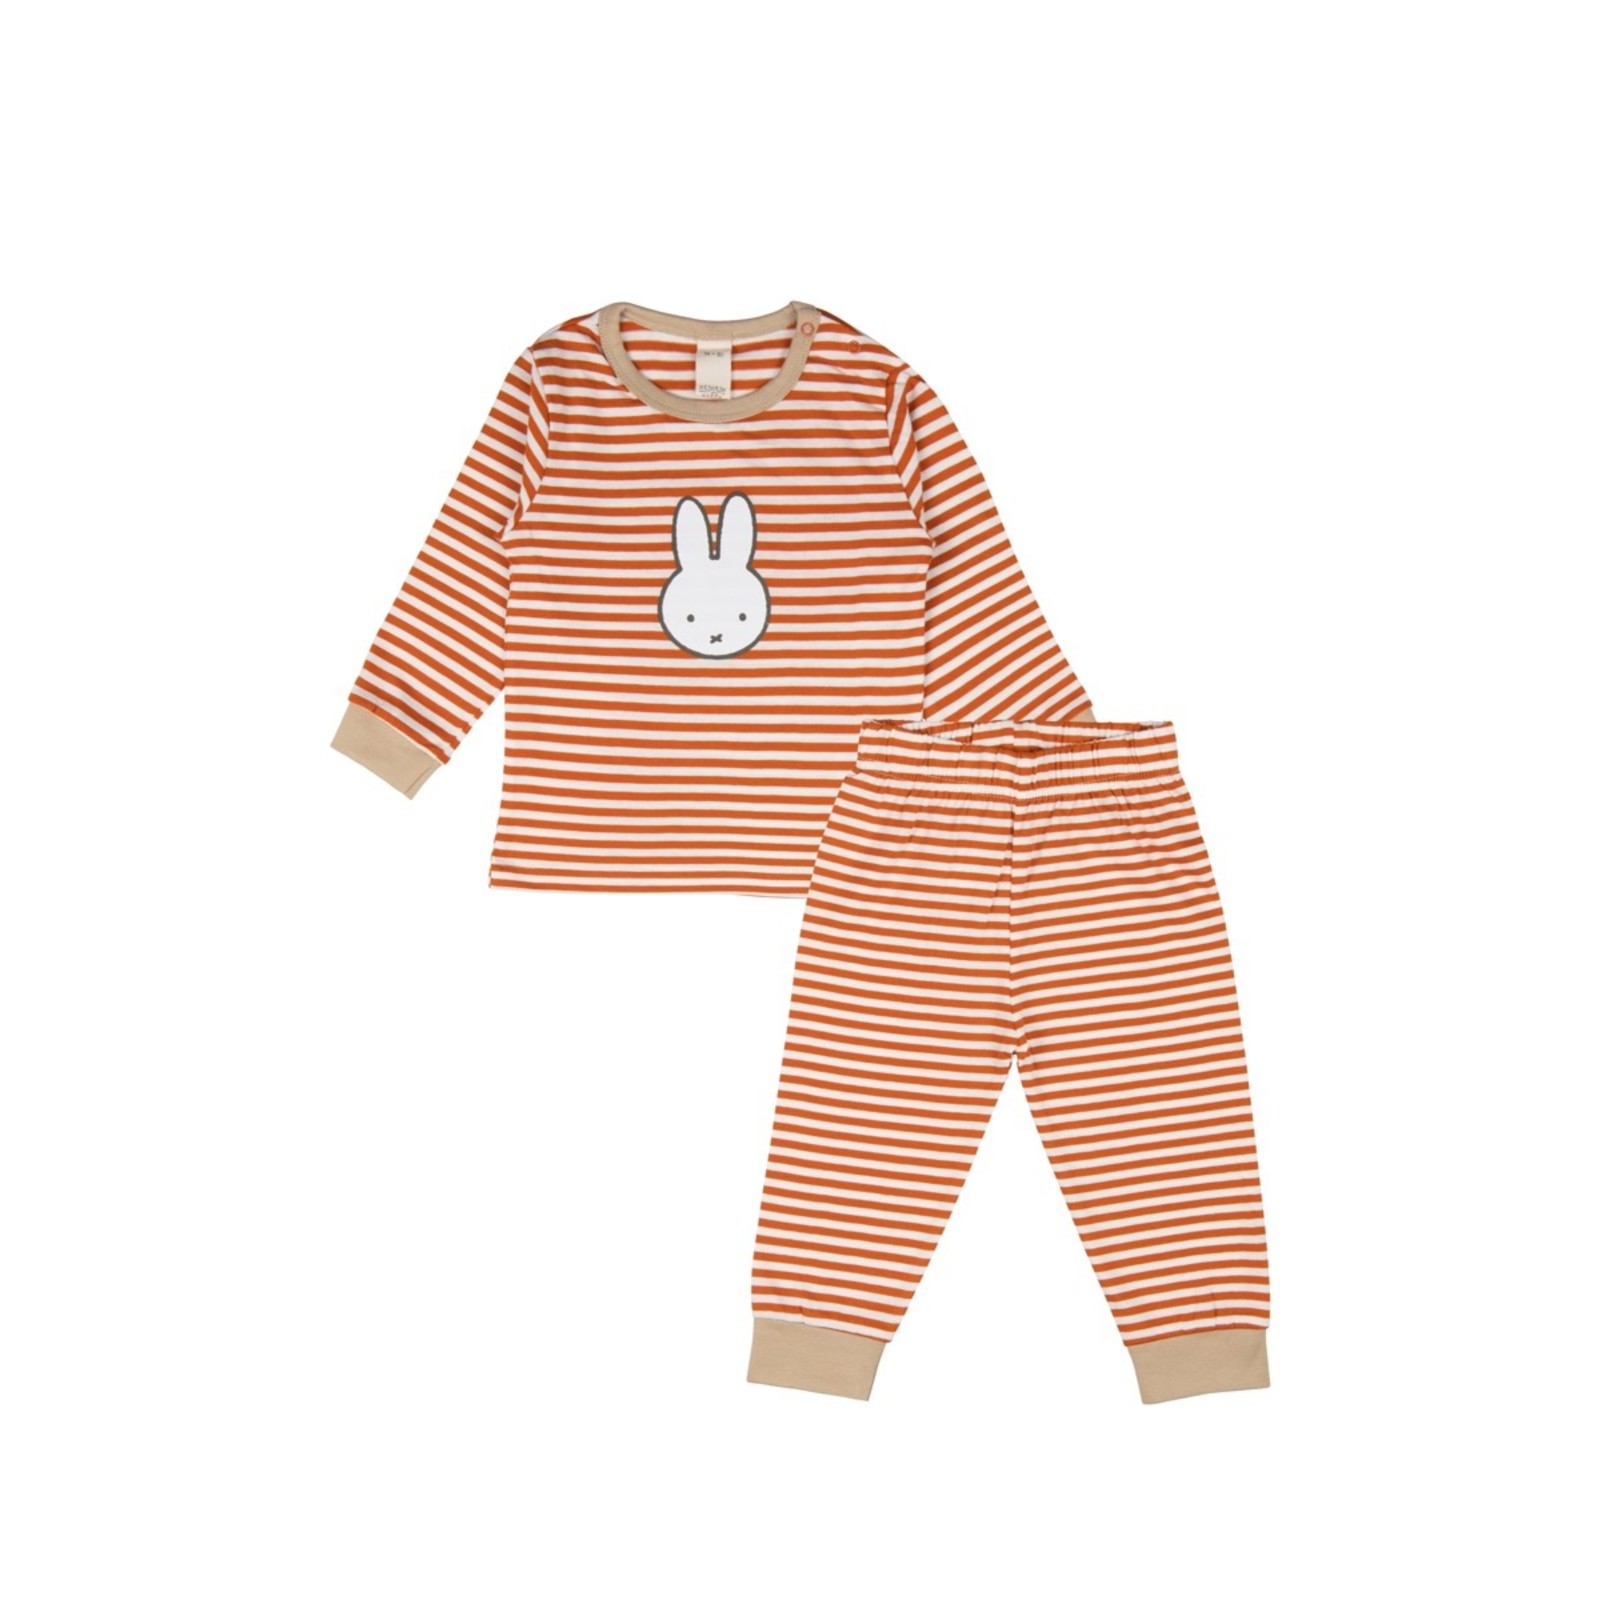 Pyjama stripe sunset-sand size 98/104 (3-4 years)